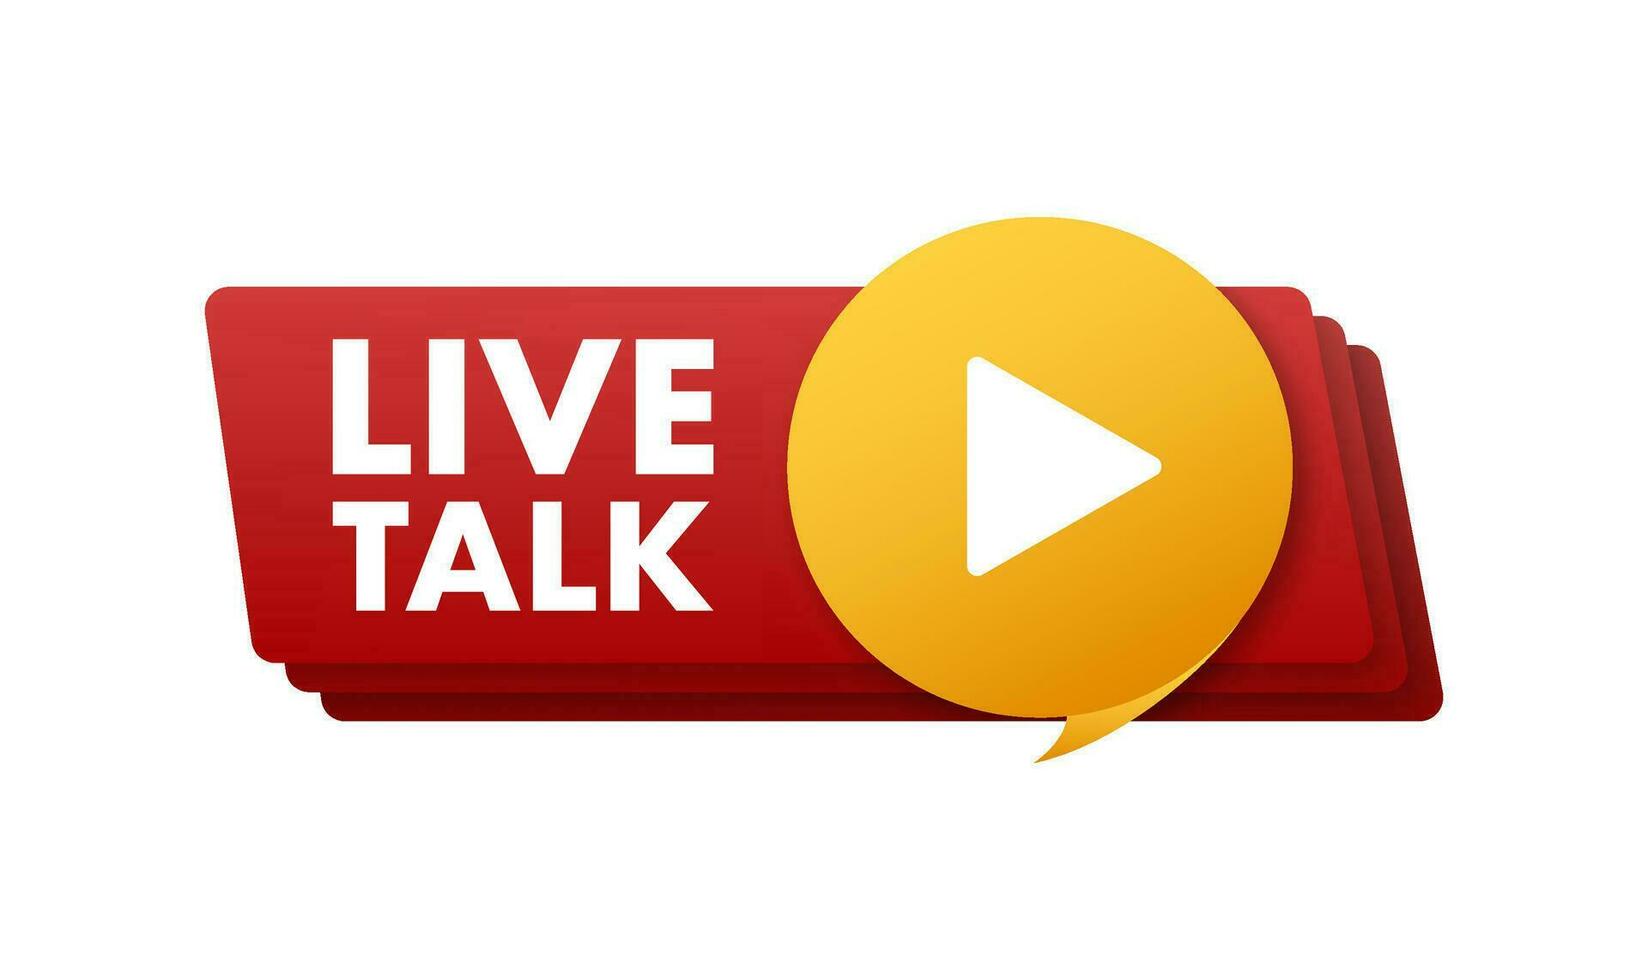 Live talk. Element for broadcasting. Video stream icon. Vector stock illustration